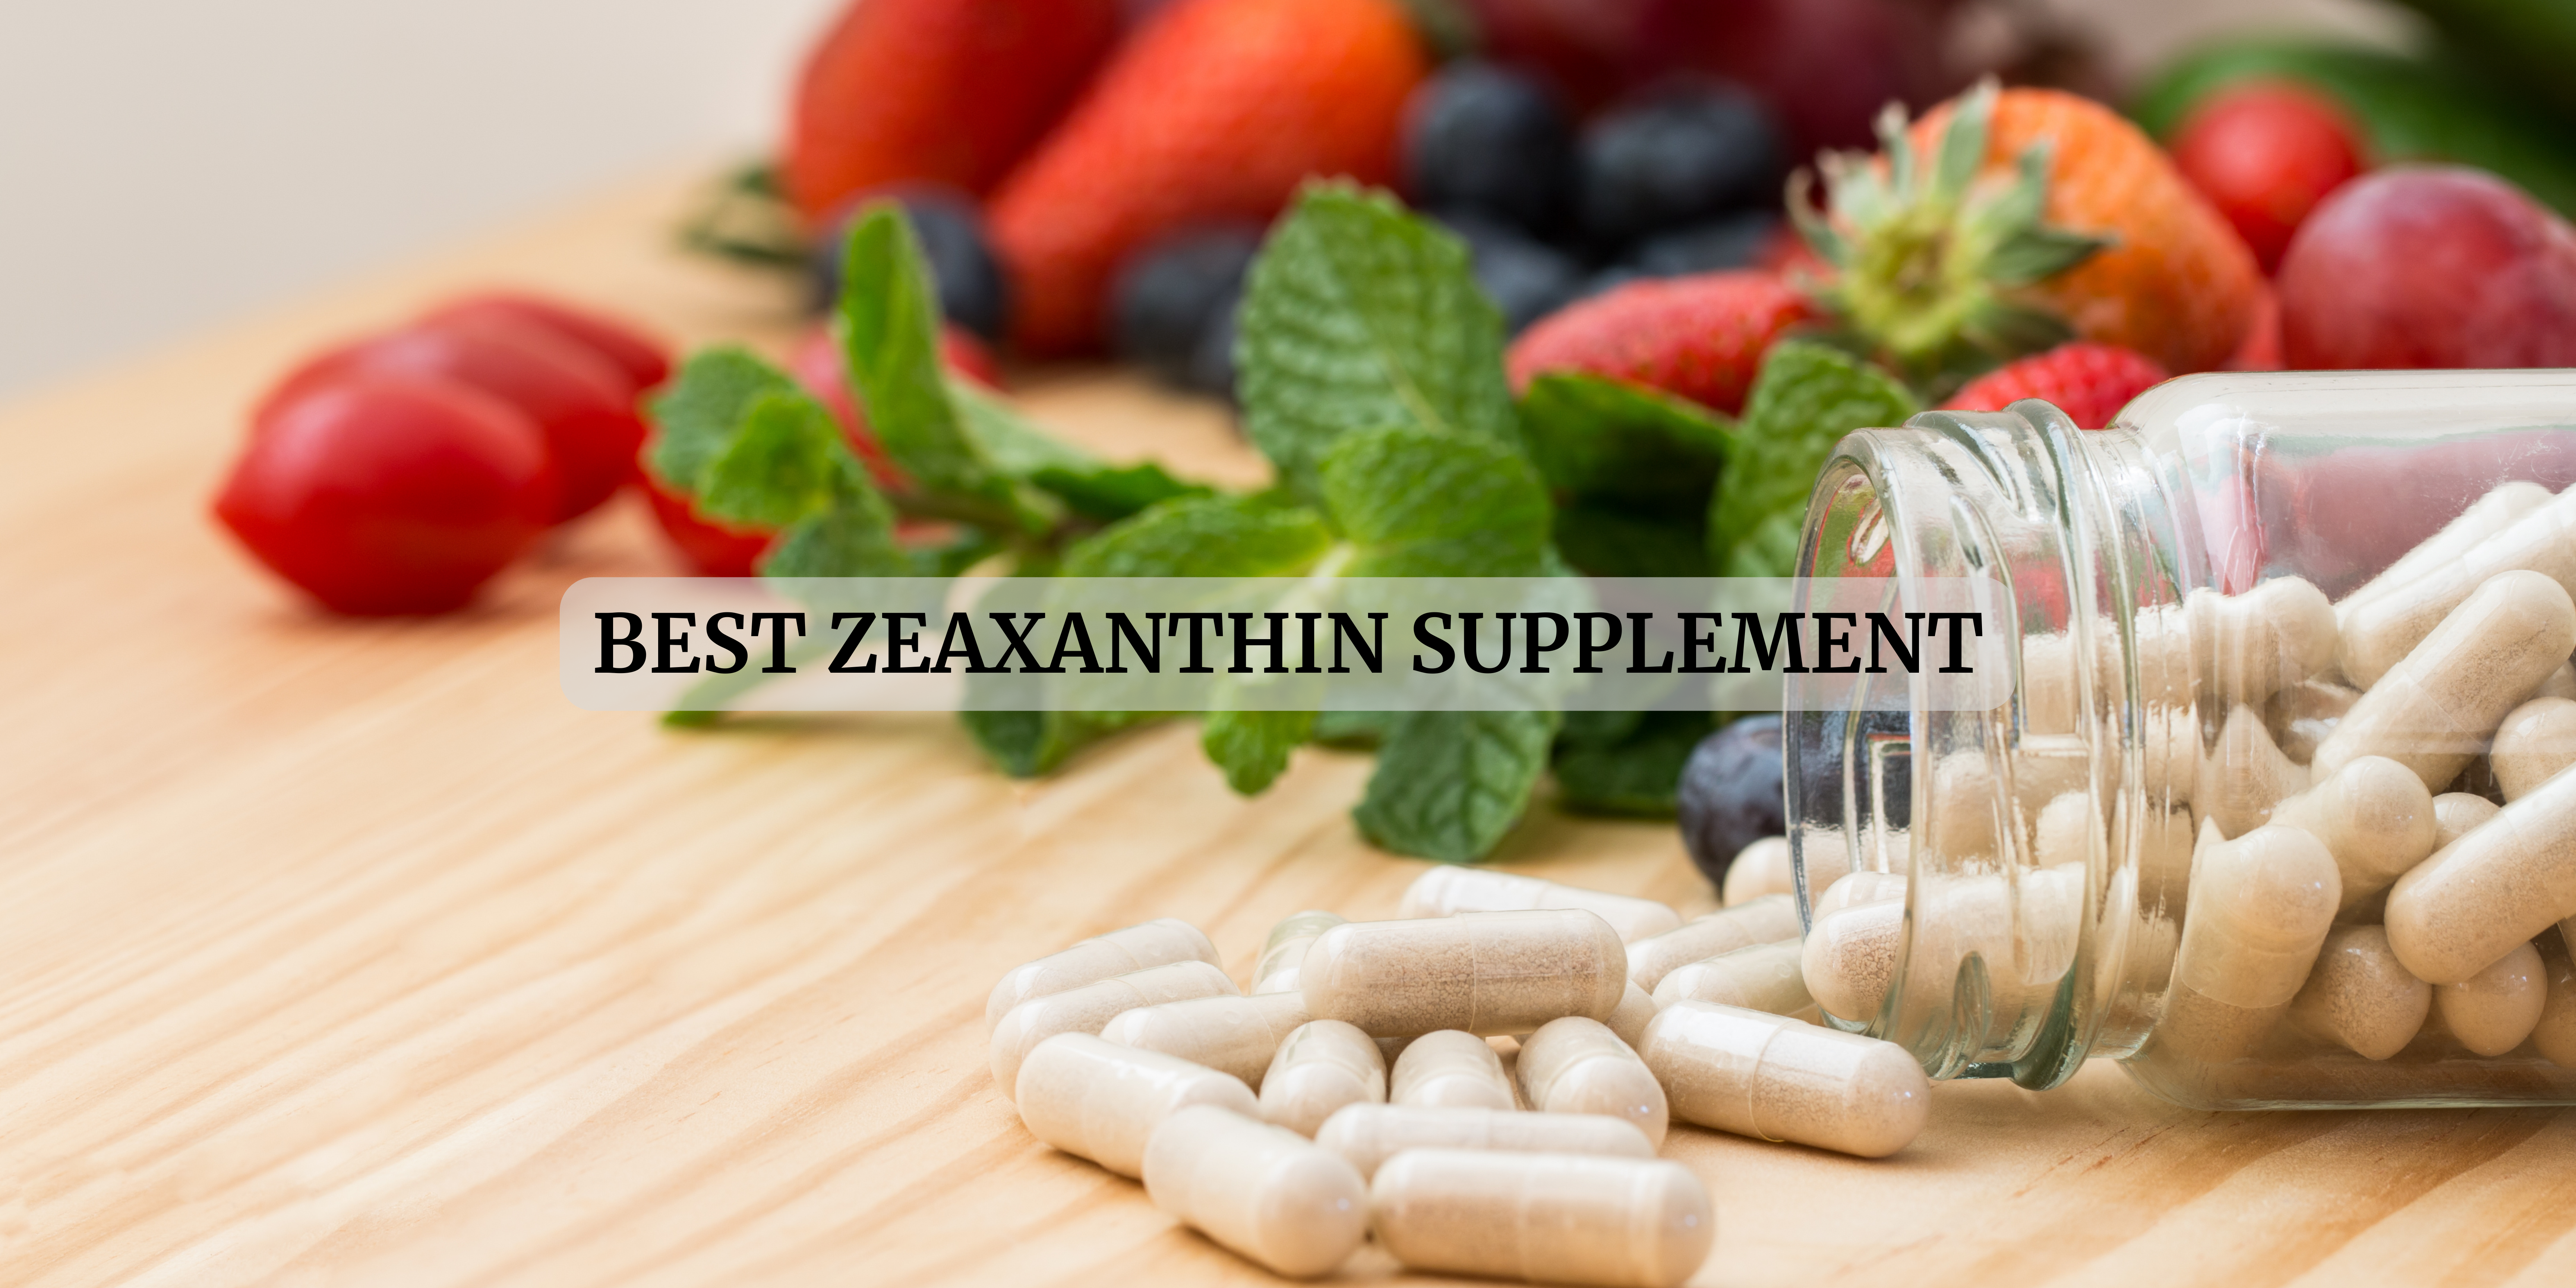 zeaxanthin supplement in Spain